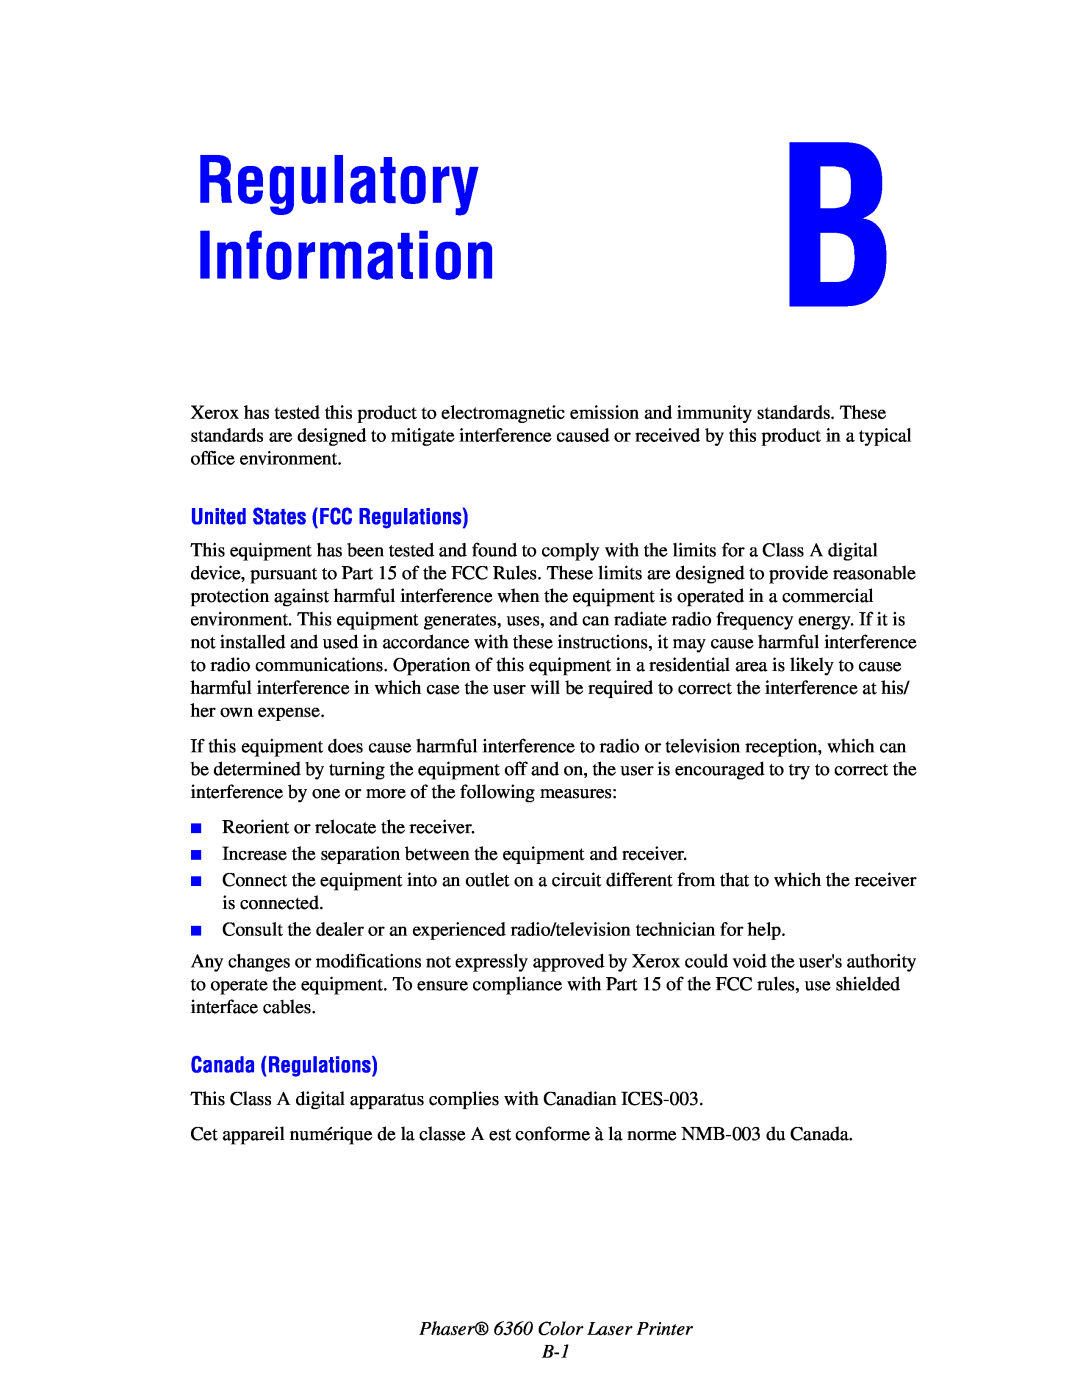 Xerox Regulatory Information, United States FCC Regulations, Canada Regulations, Phaser 6360 Color Laser Printer B-1 